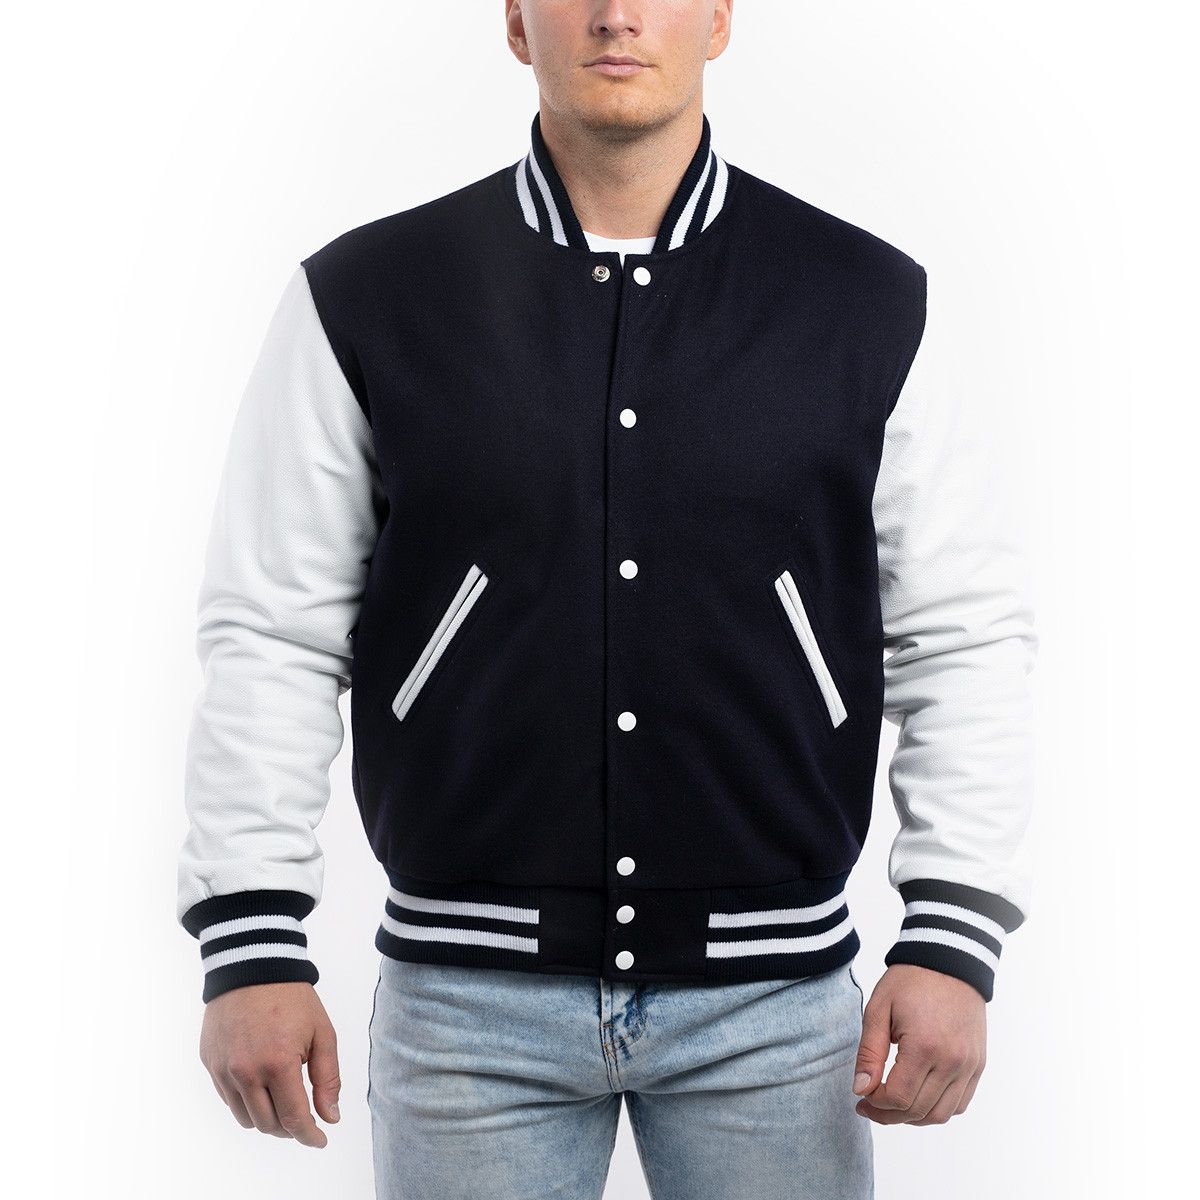 Light Navy & White Letterman Jacket – Build Your Jacket